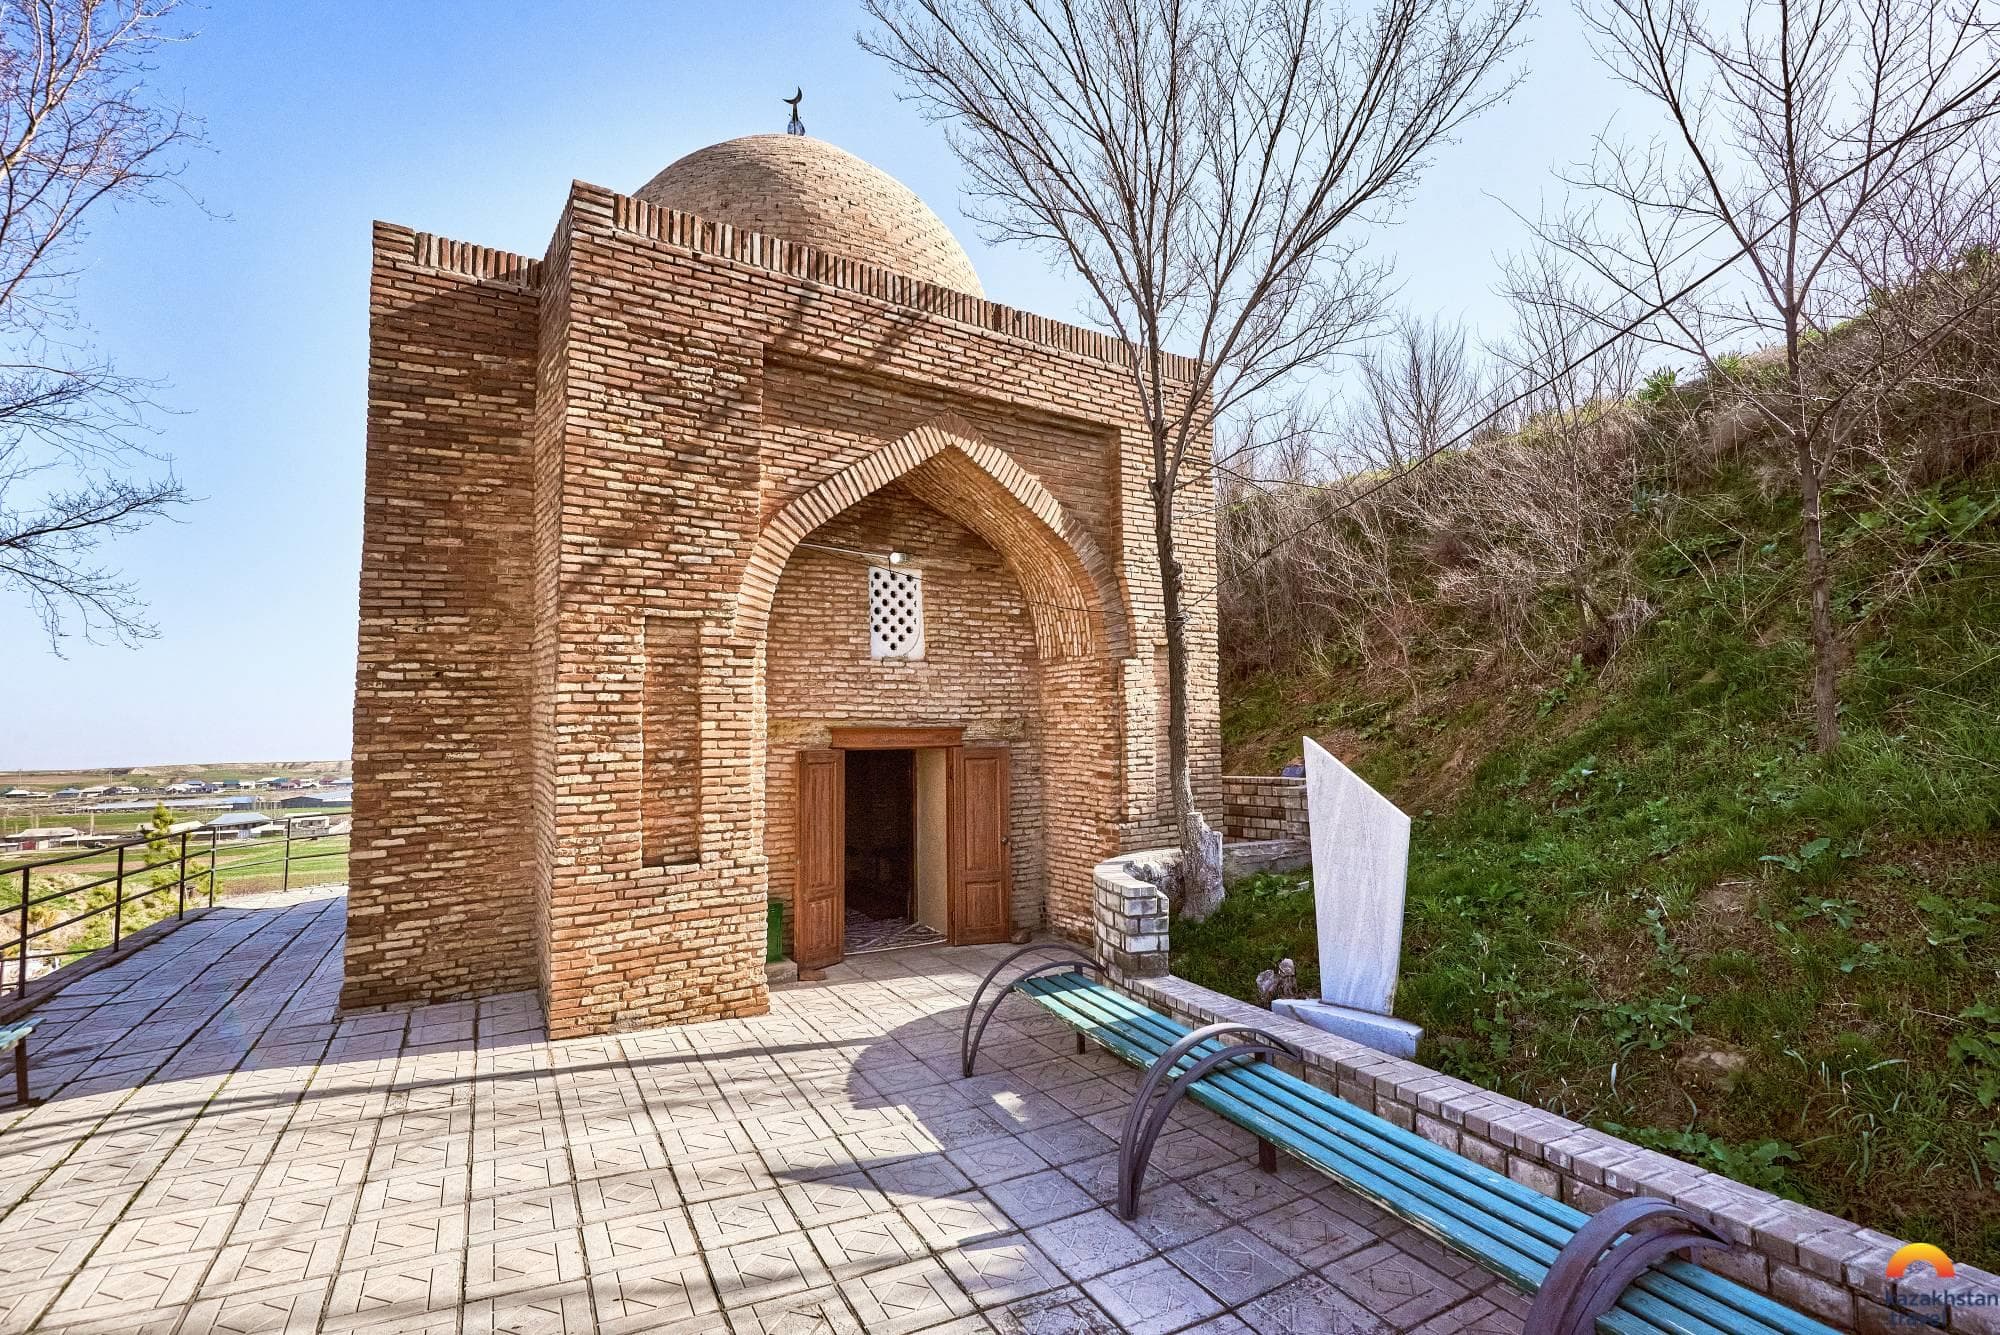 The Mausoleum of Ibrahim Ata